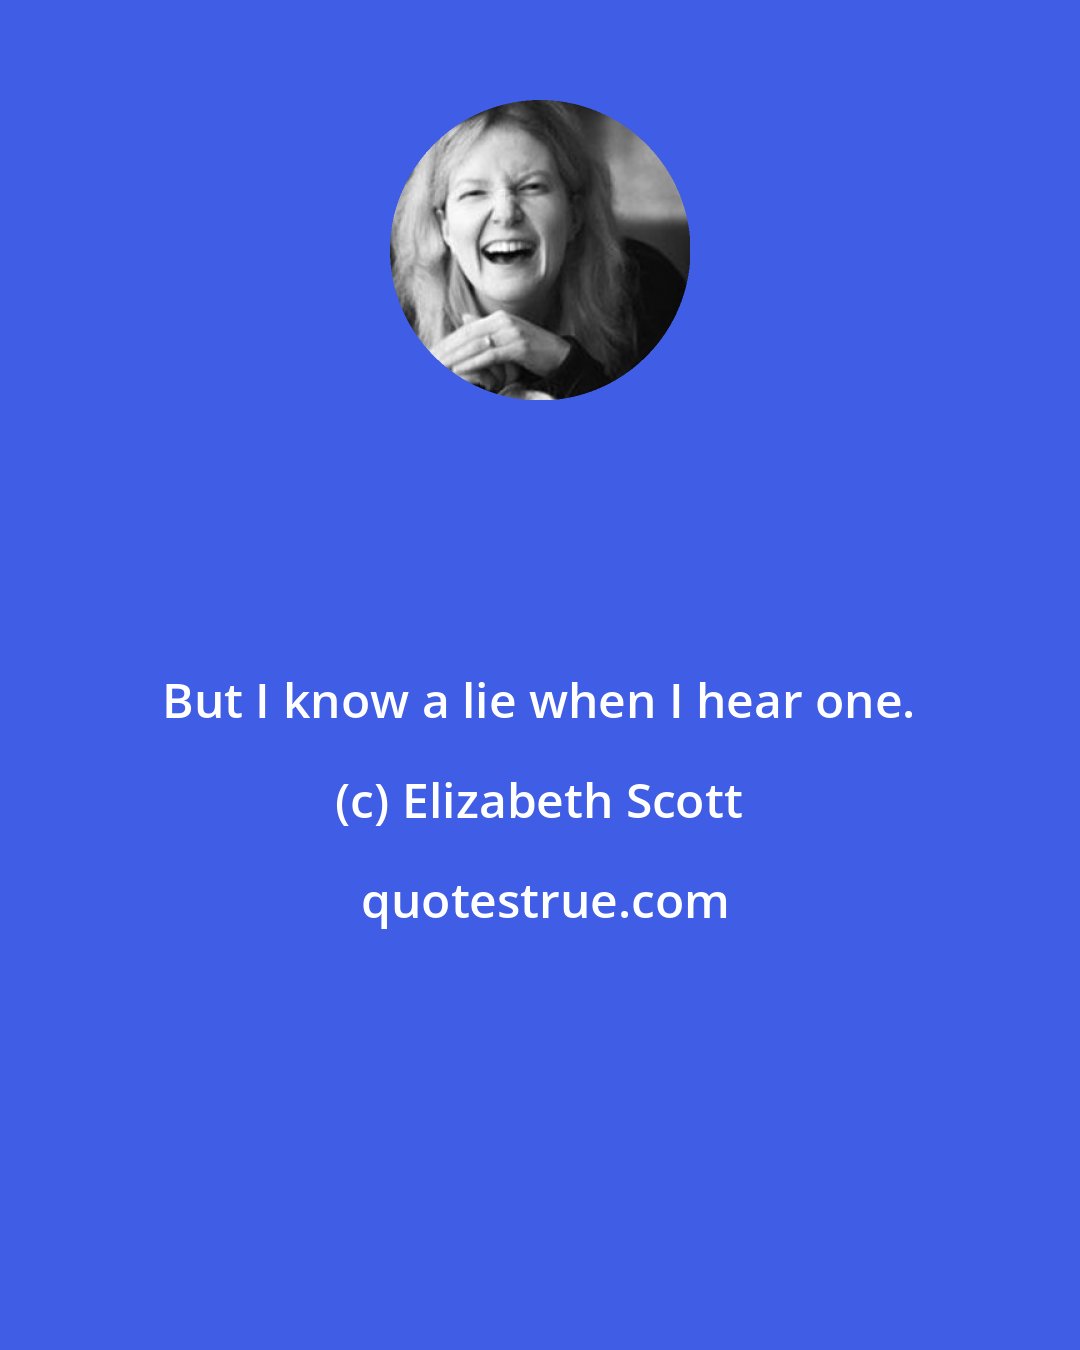 Elizabeth Scott: But I know a lie when I hear one.